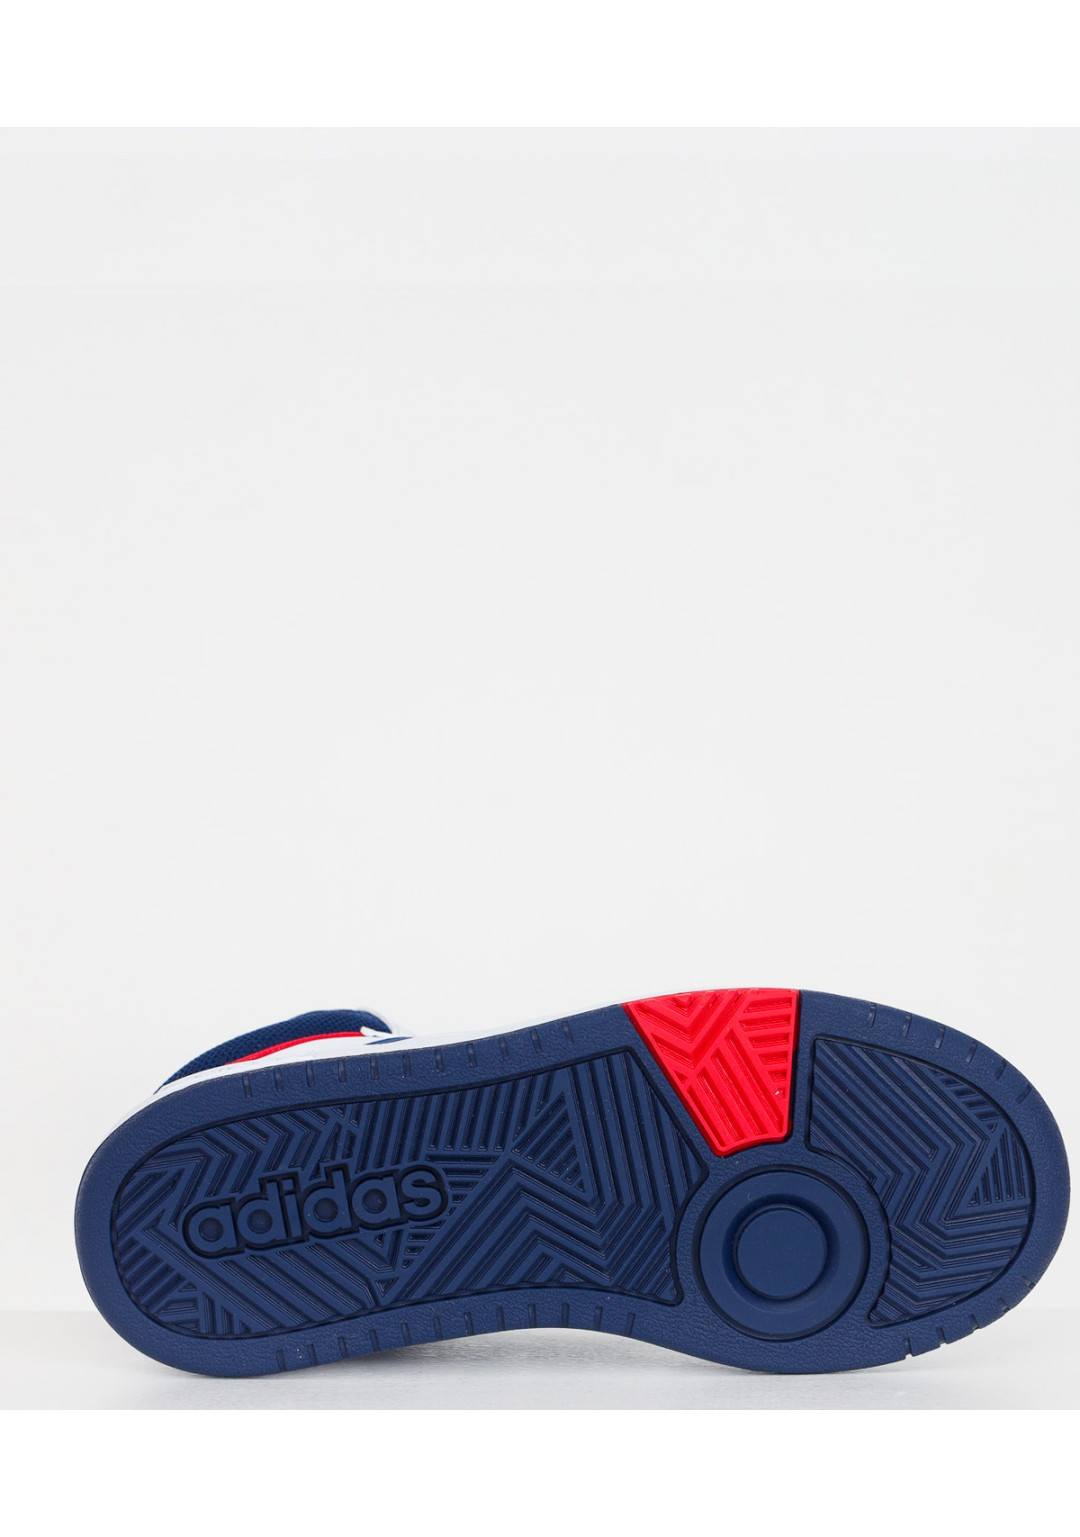 Adidas - Hoops Mid 3.0 - Bambini e ragazzi - GZ 9647